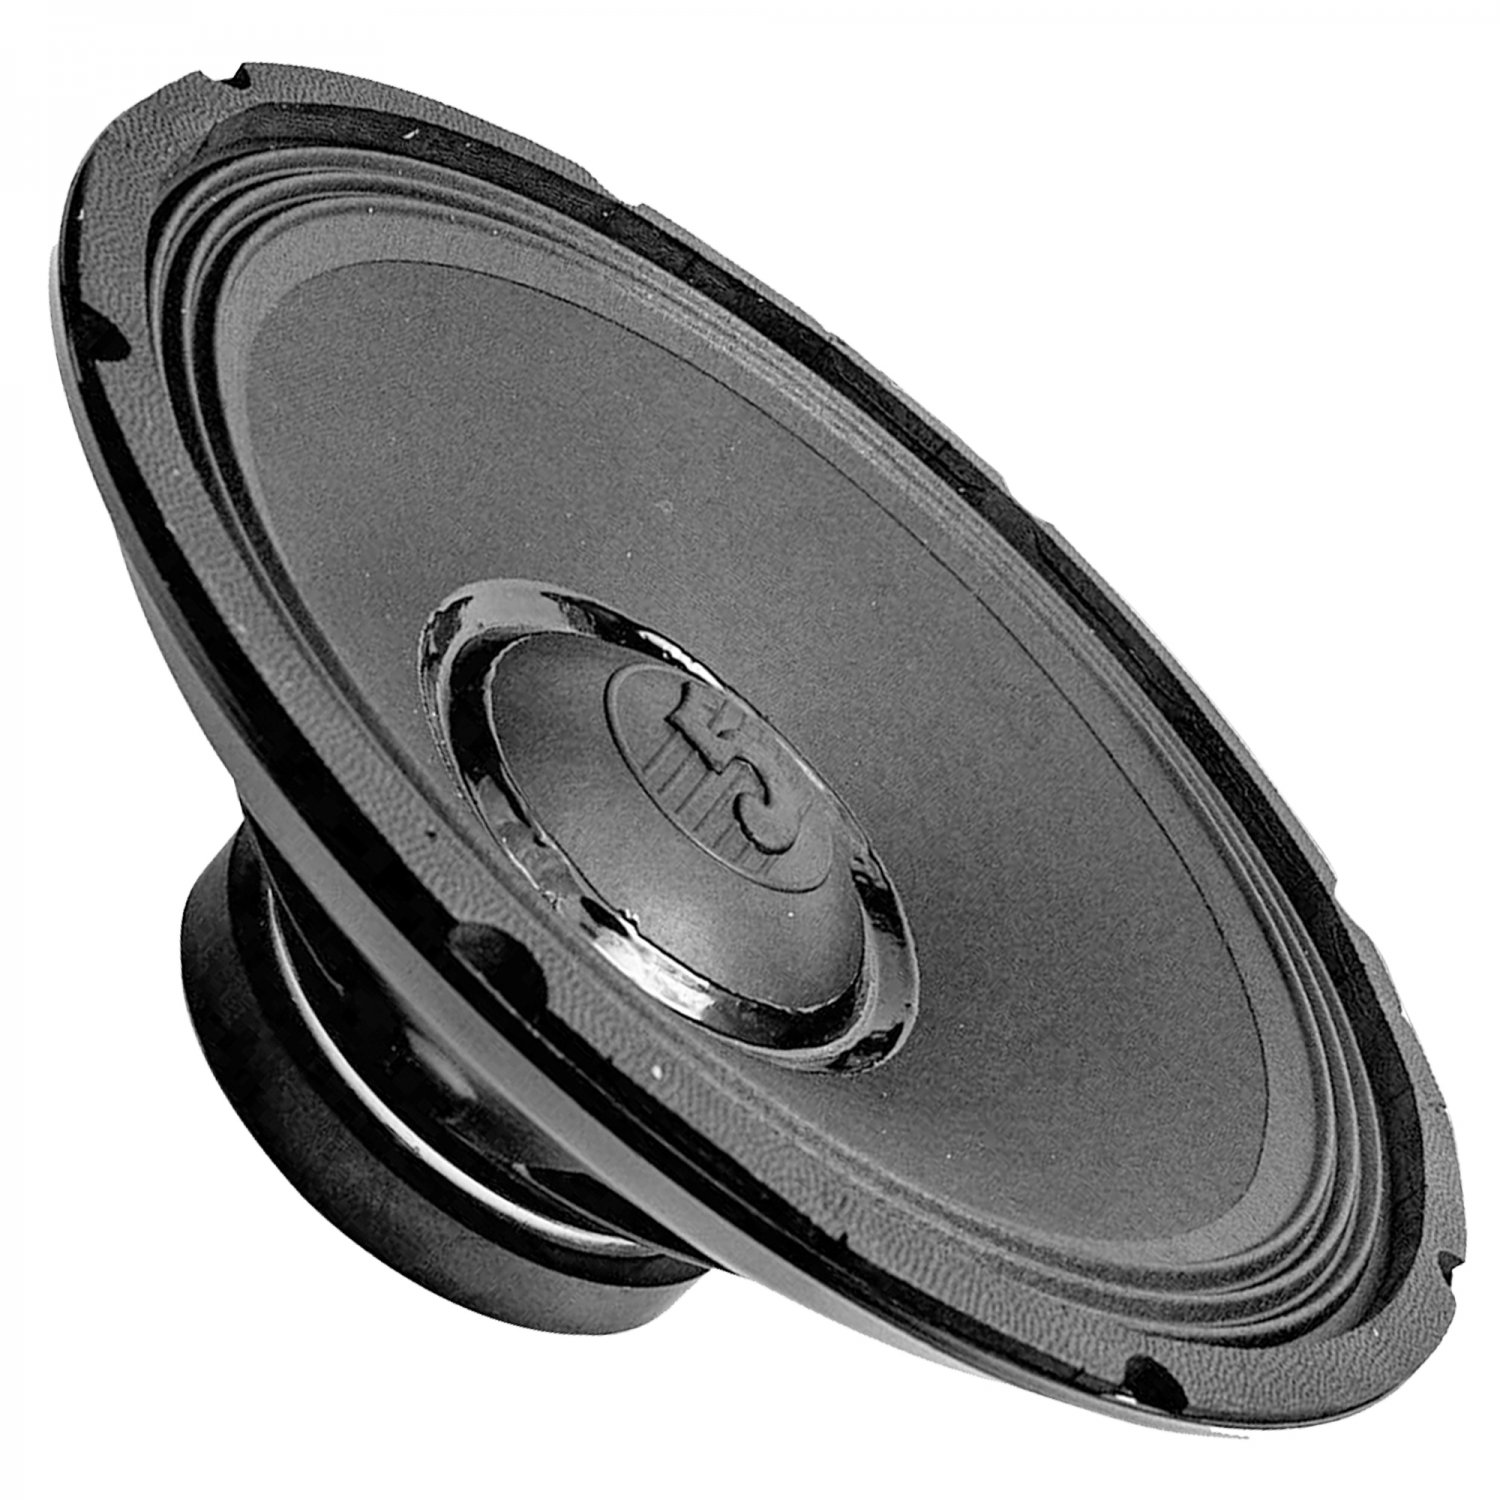 5 Core 15 inch Subwoofer Replacement PRO DJ Speaker Sub Woofer Full Range Loud 350 W 15-185 MS 350W